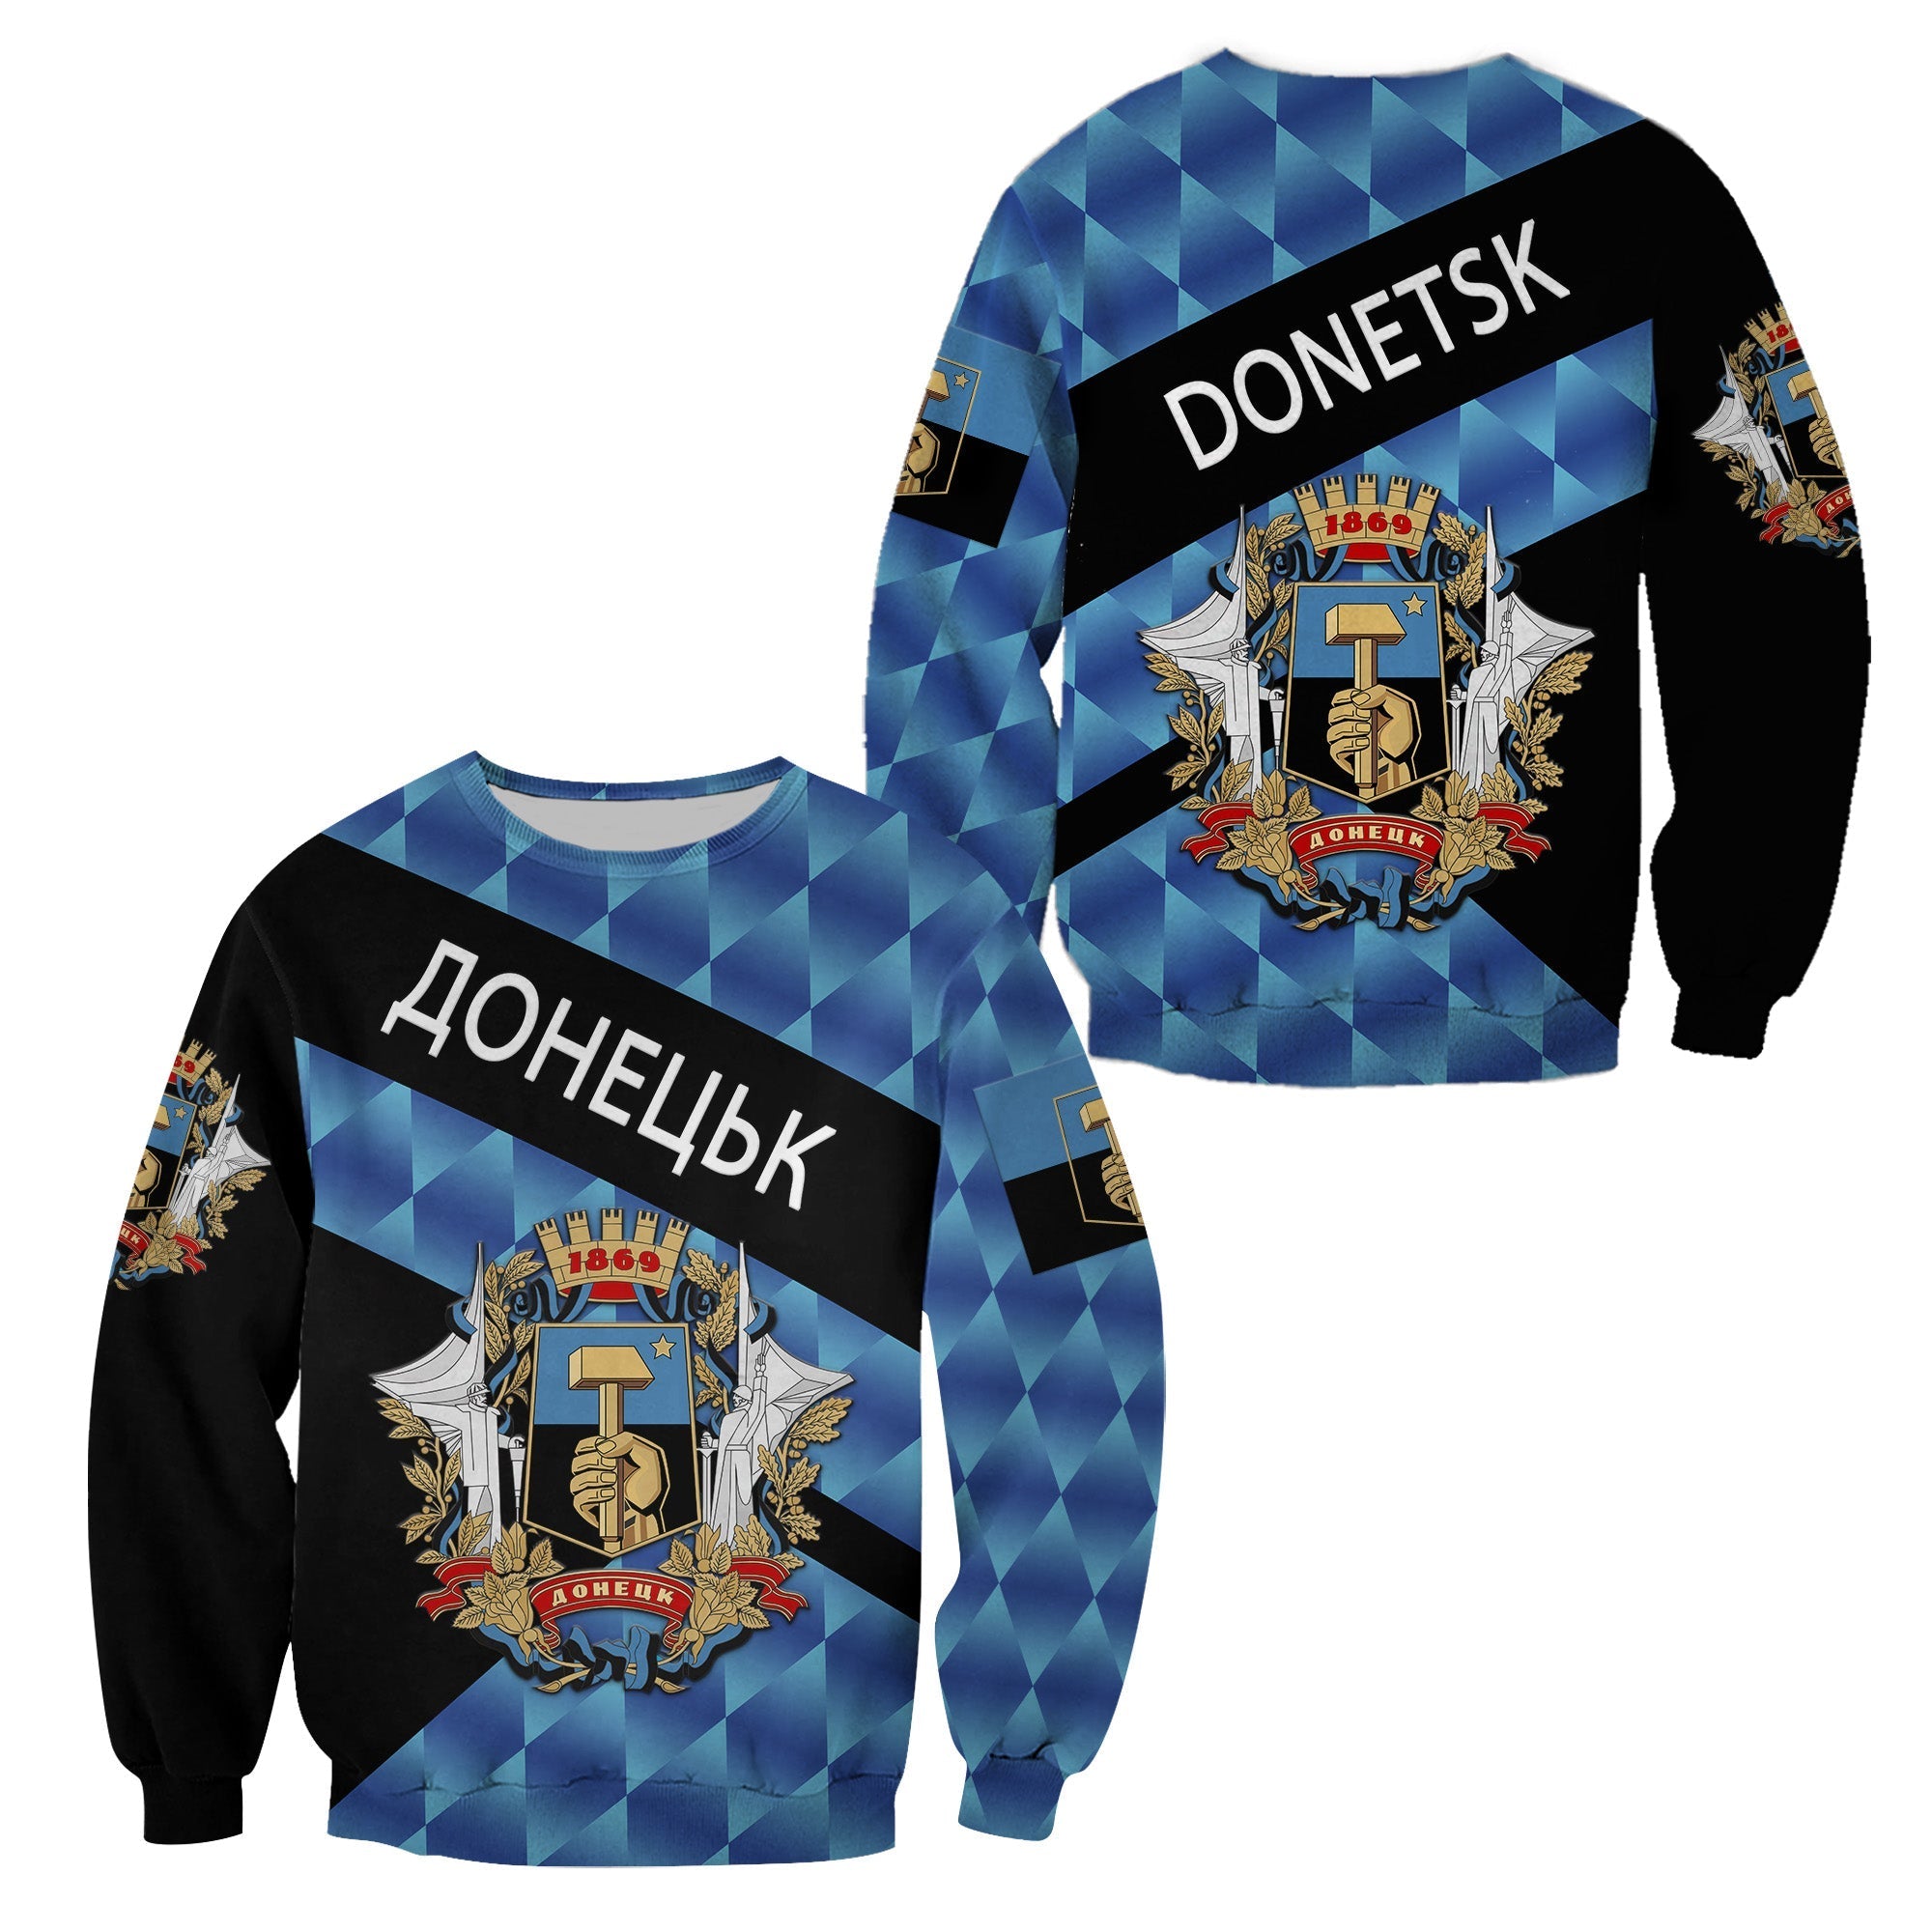 ukraine-donetsk-sweatshirt-sporty-style